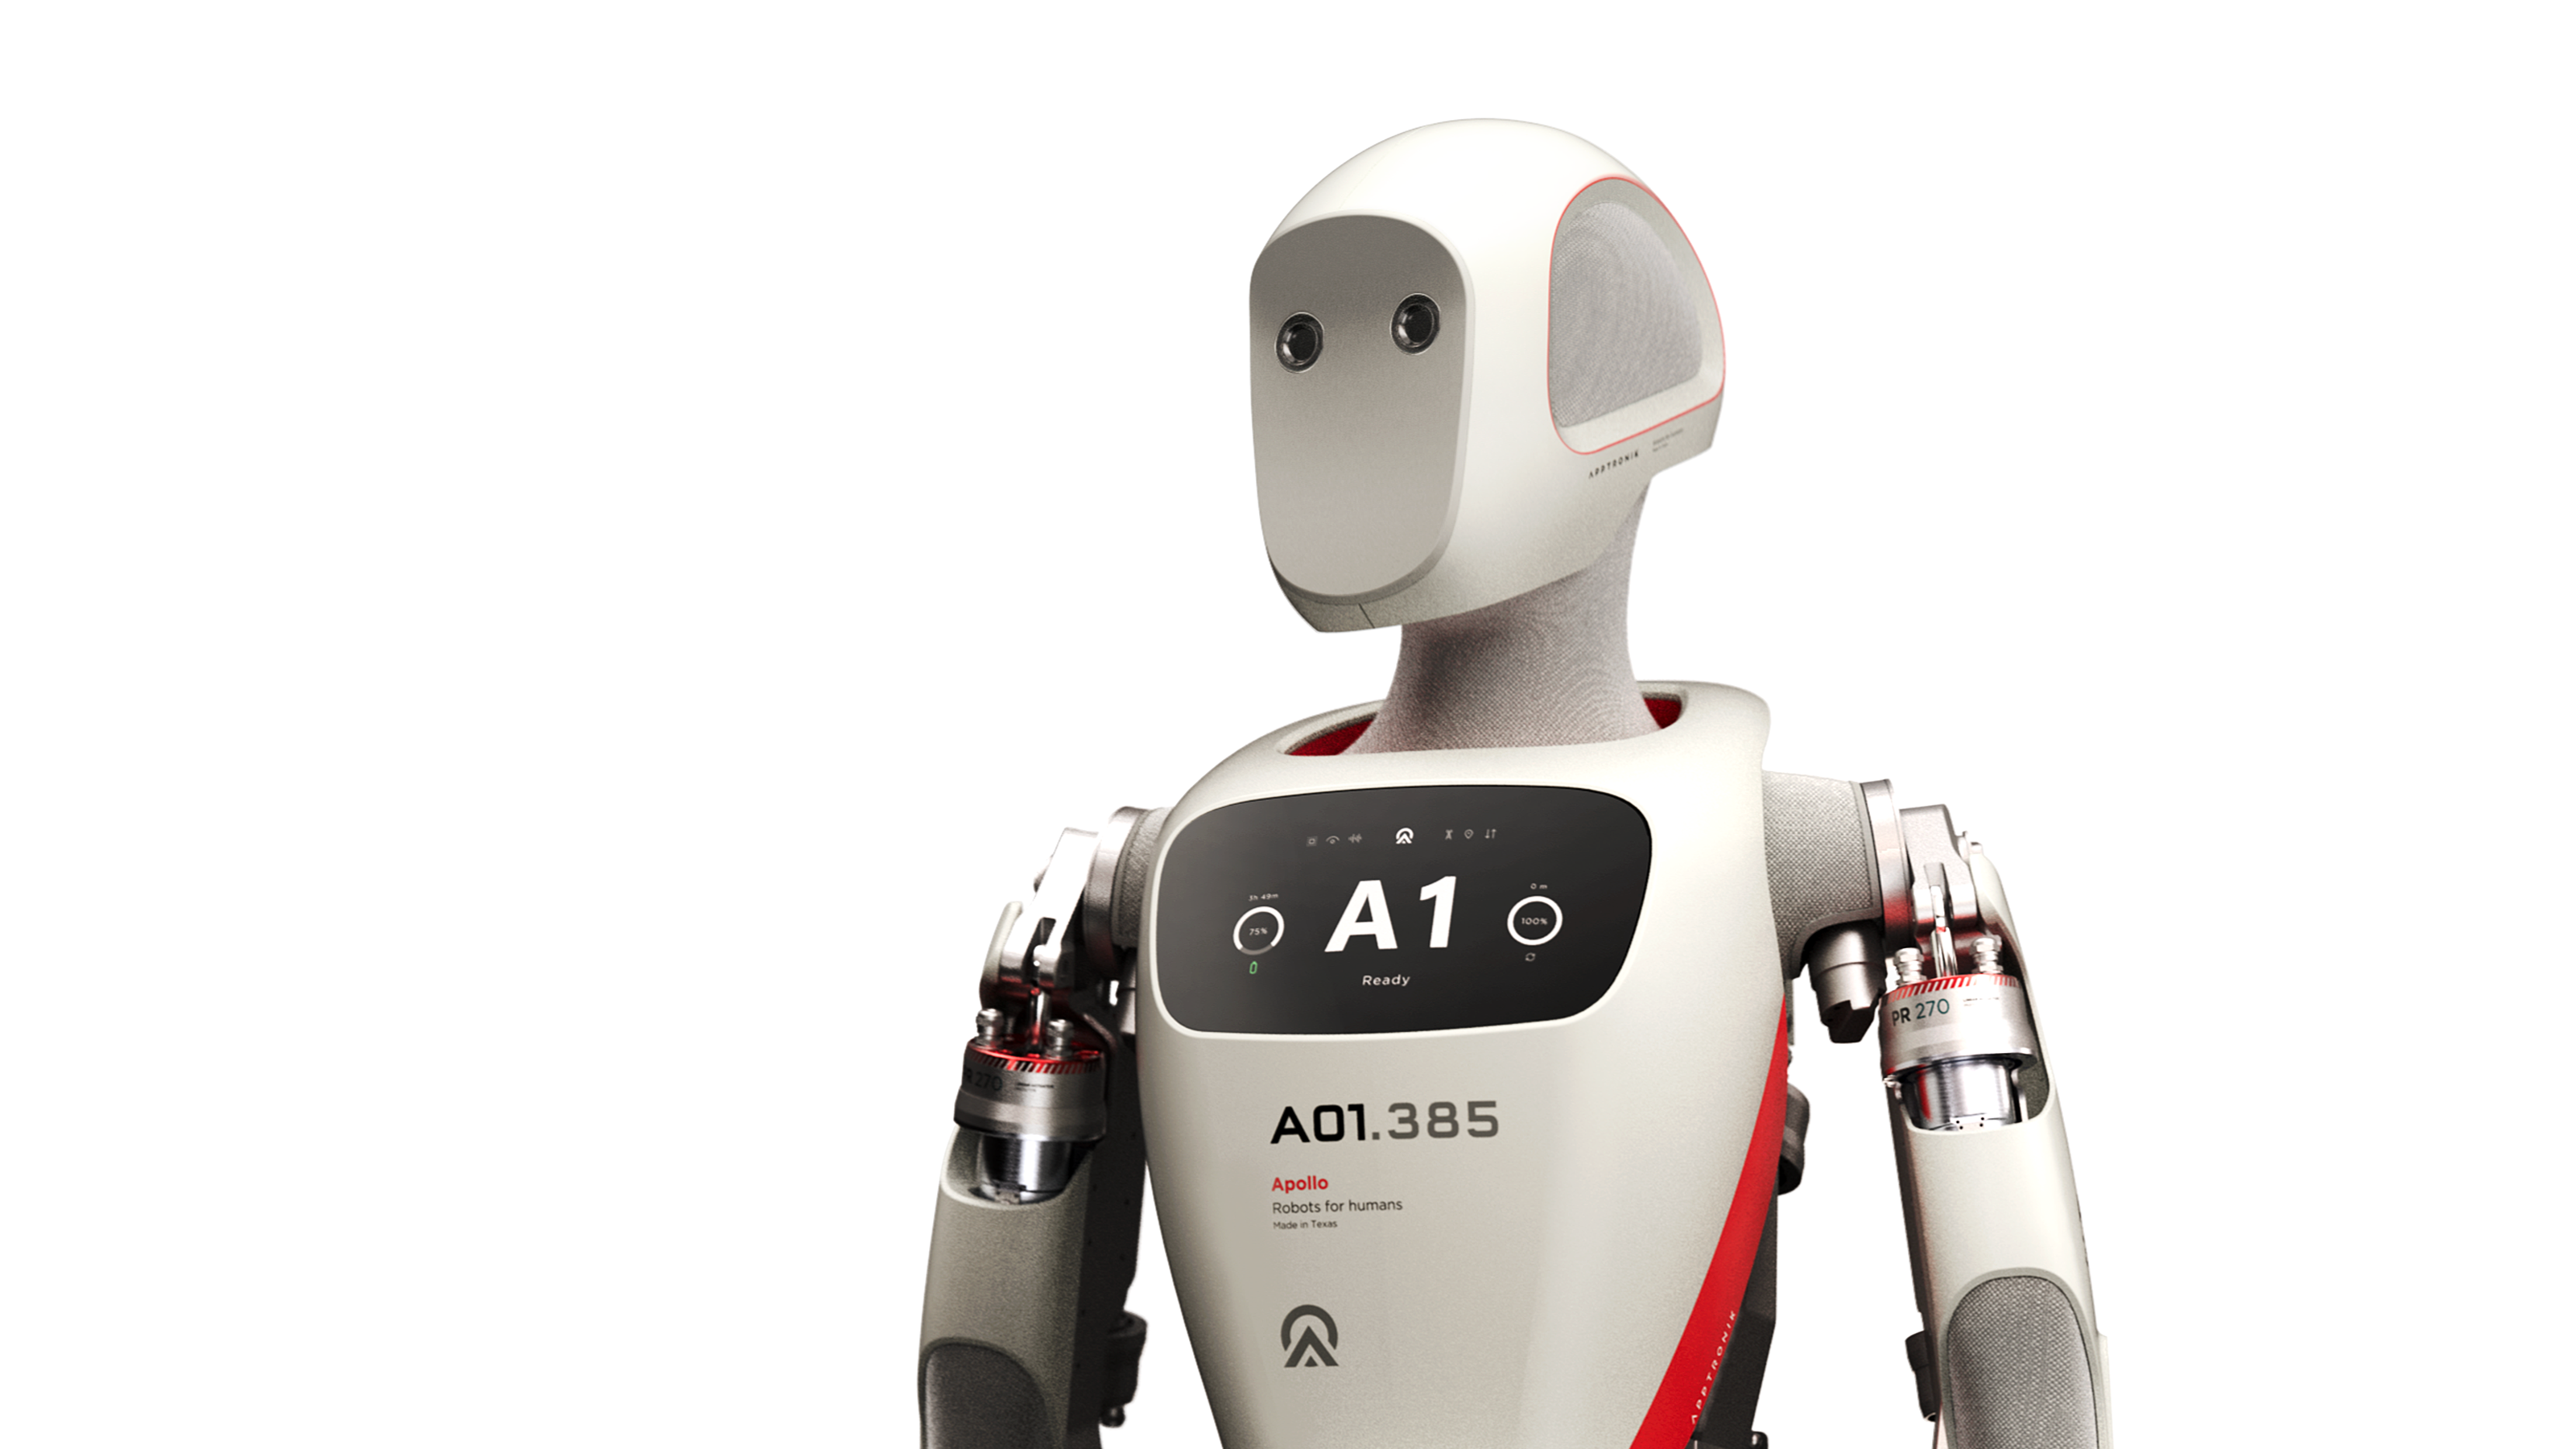 Are Autoreiv only robots? : r/ErgoProxy